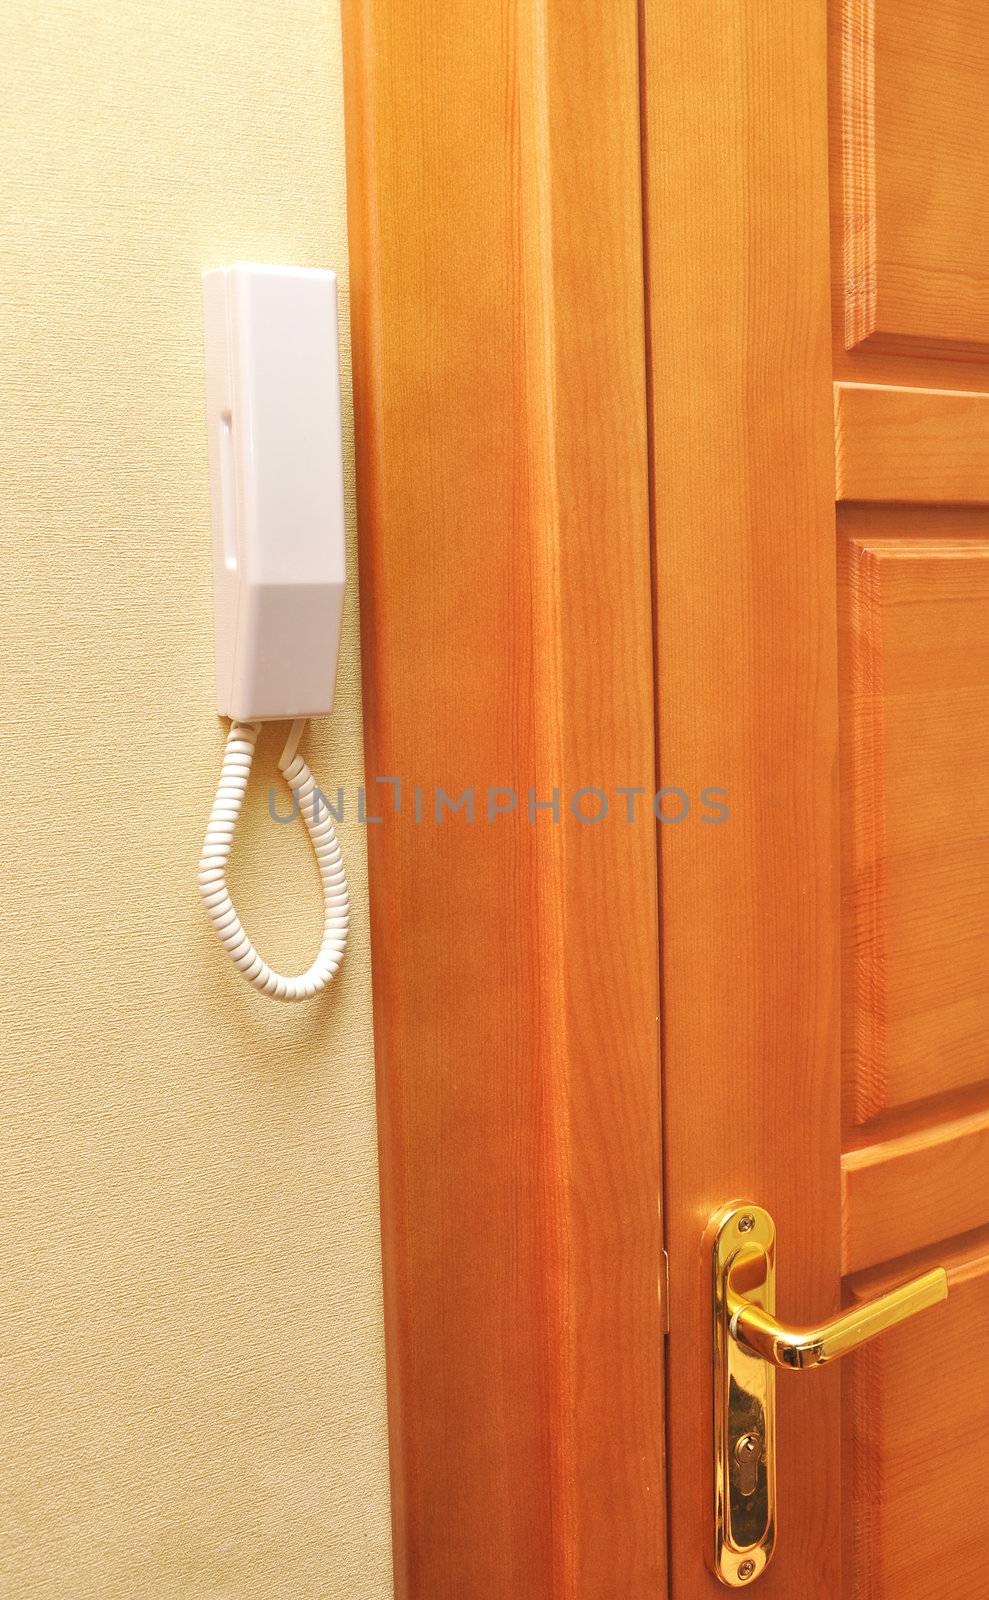 intercom phone with a button near the door